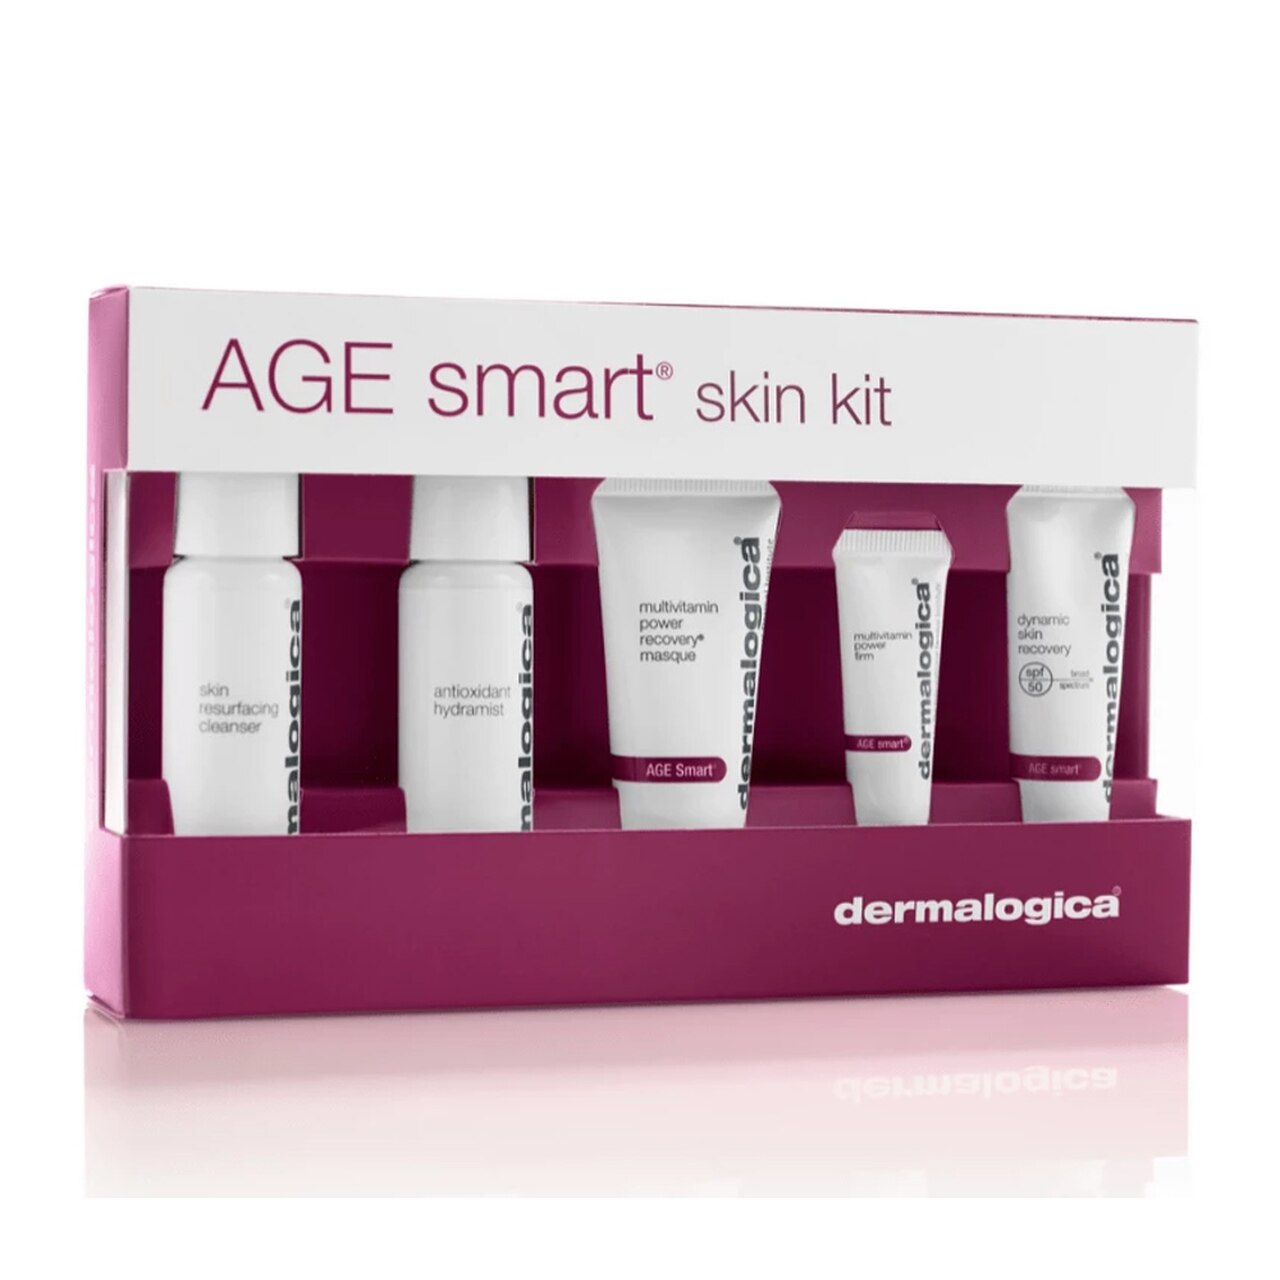 Dermalogica age smart skin kit